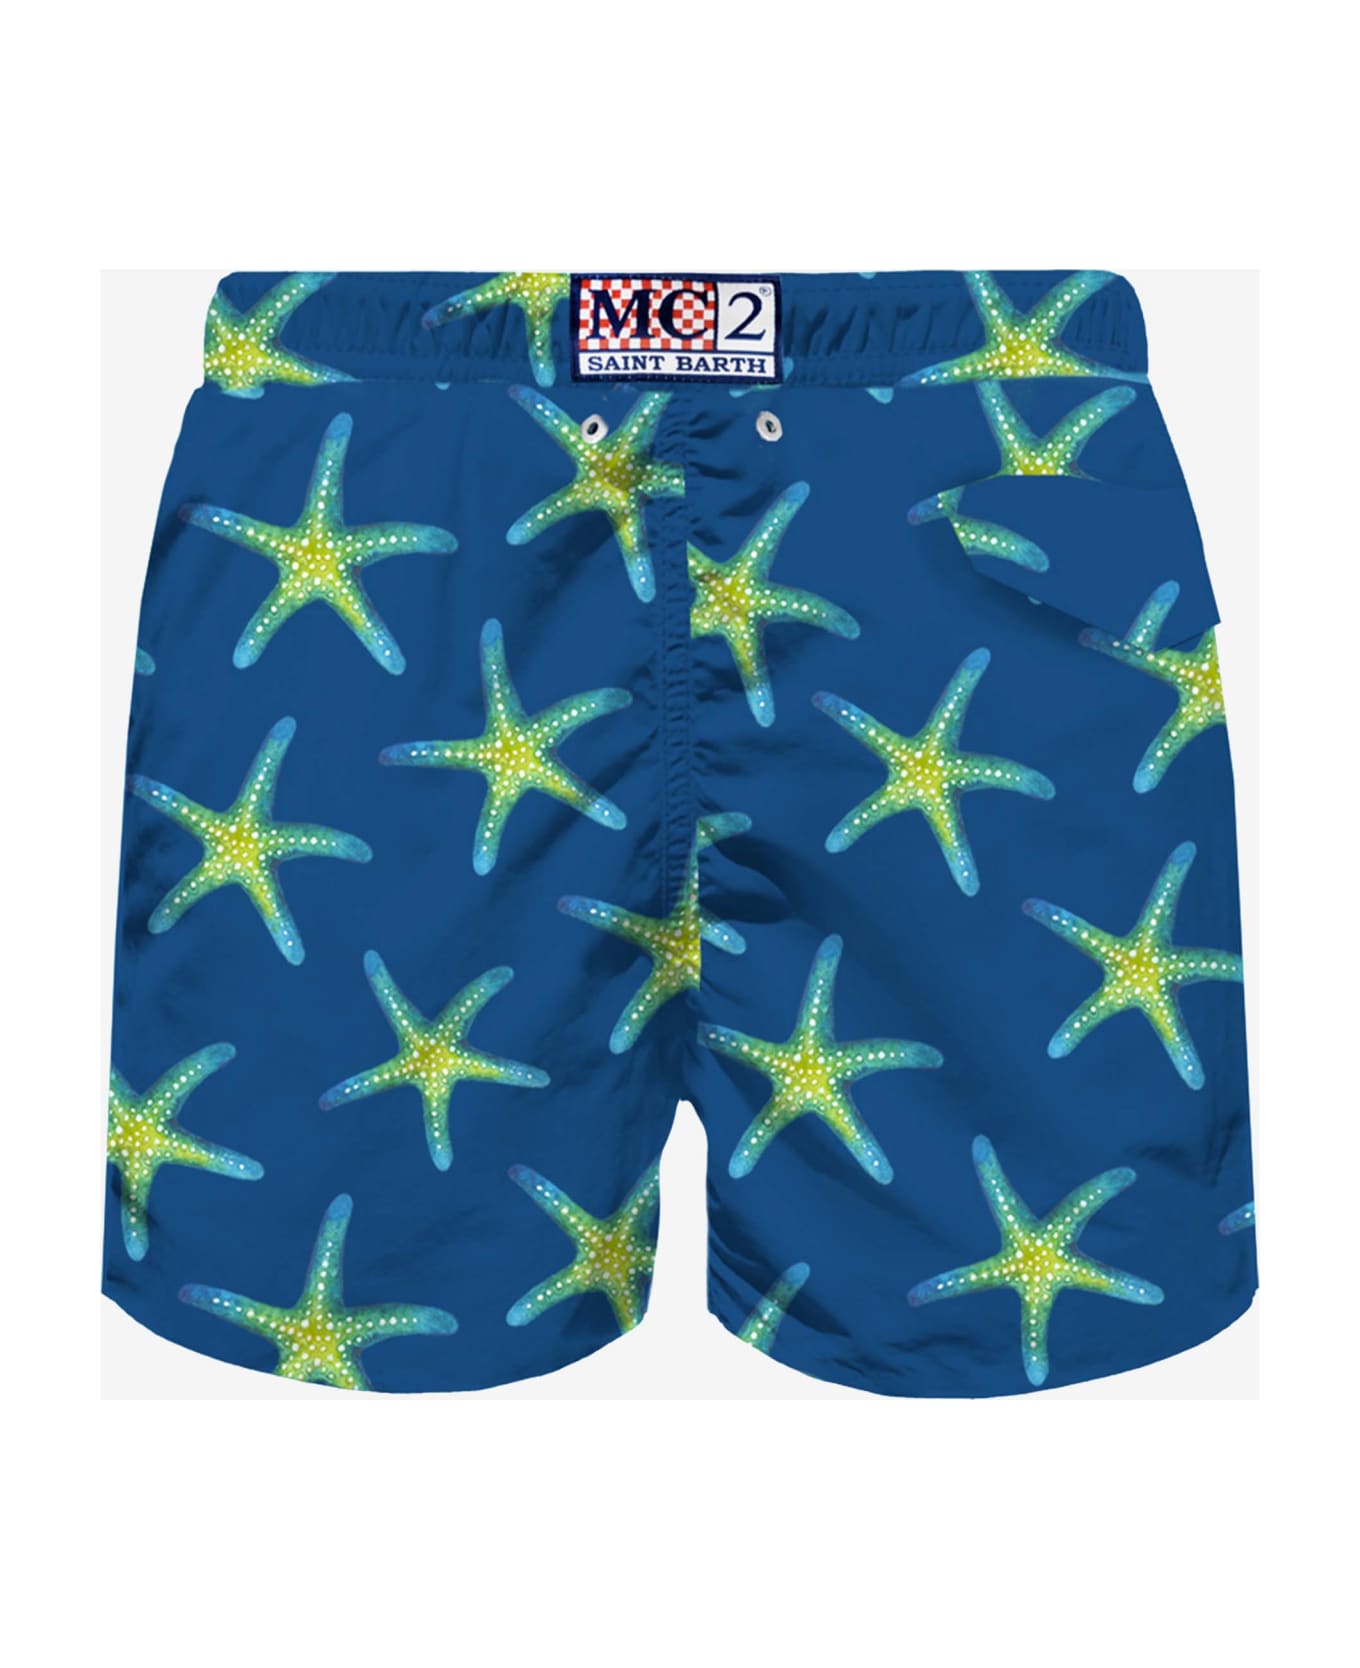 MC2 Saint Barth Man Light Fabric Swim Shorts With Marine Print